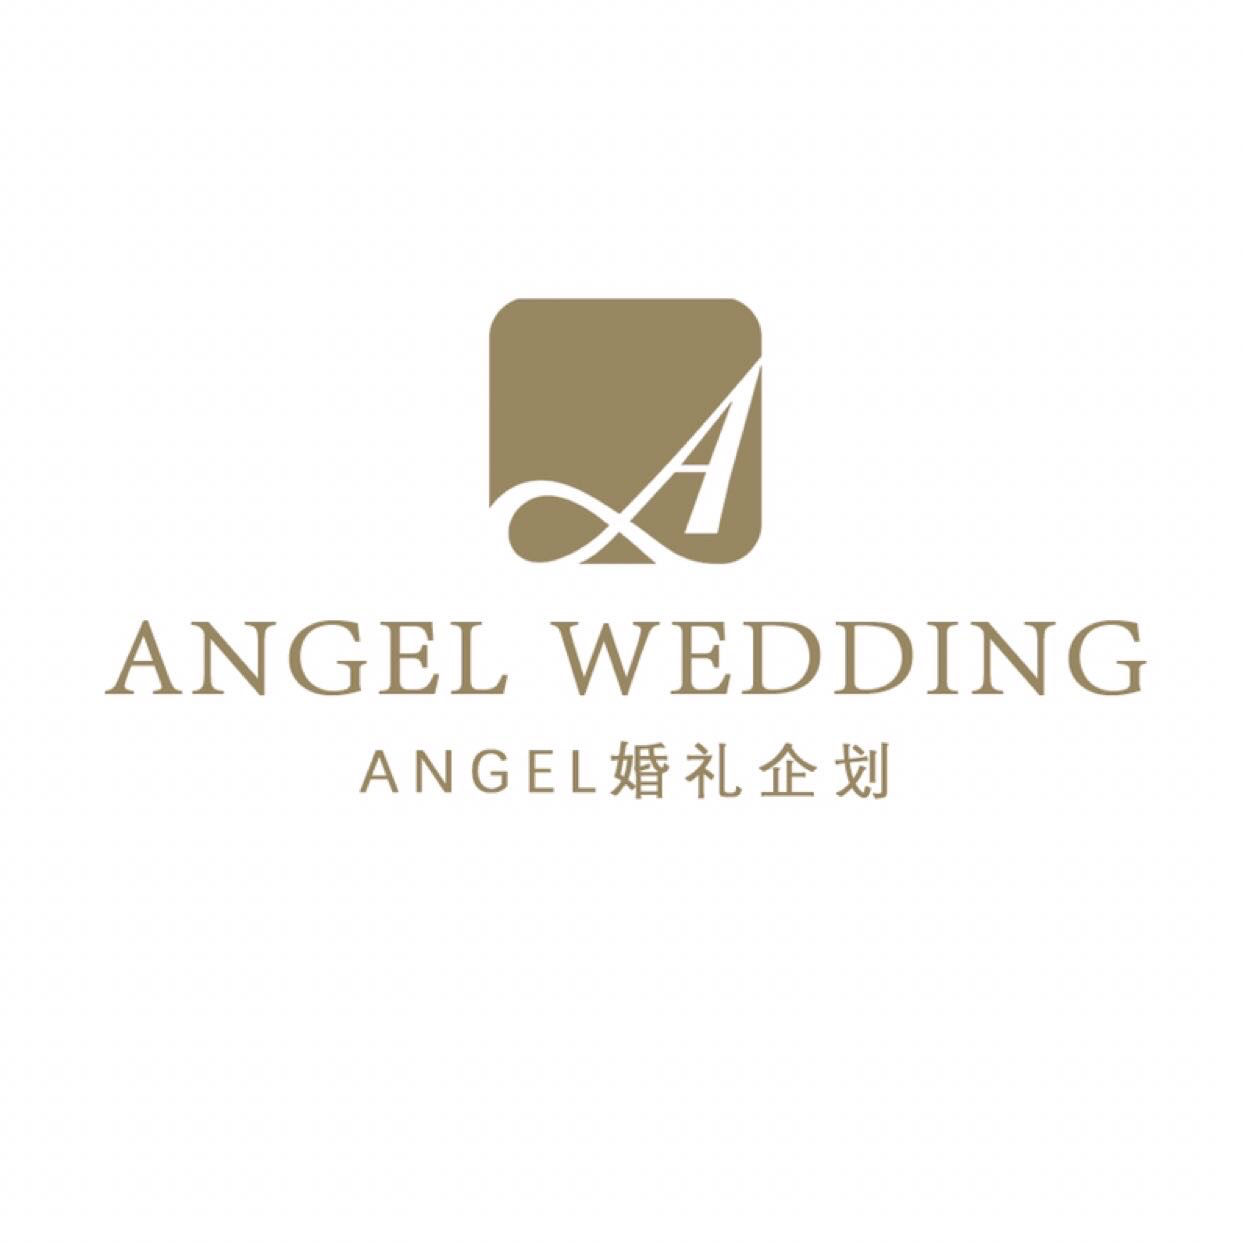 ANGEL婚礼企划